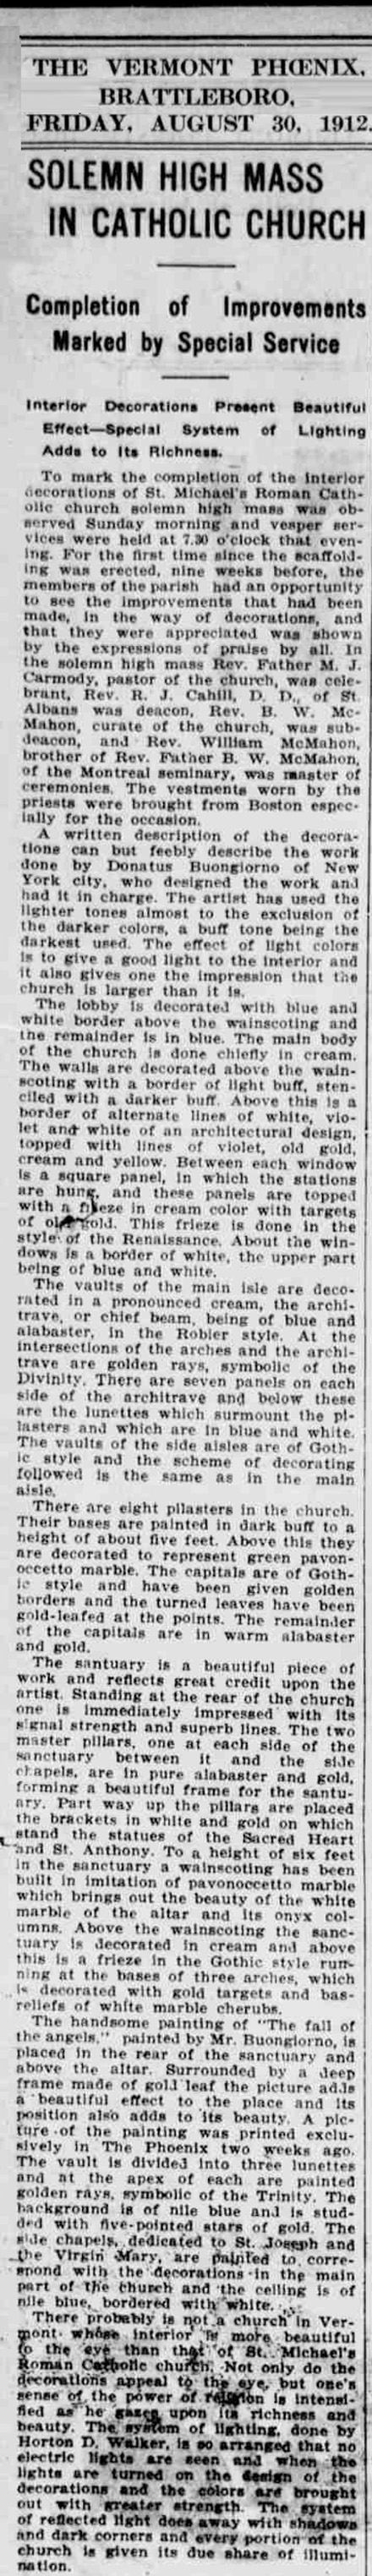 Vermont Phoenix August 30, 1912